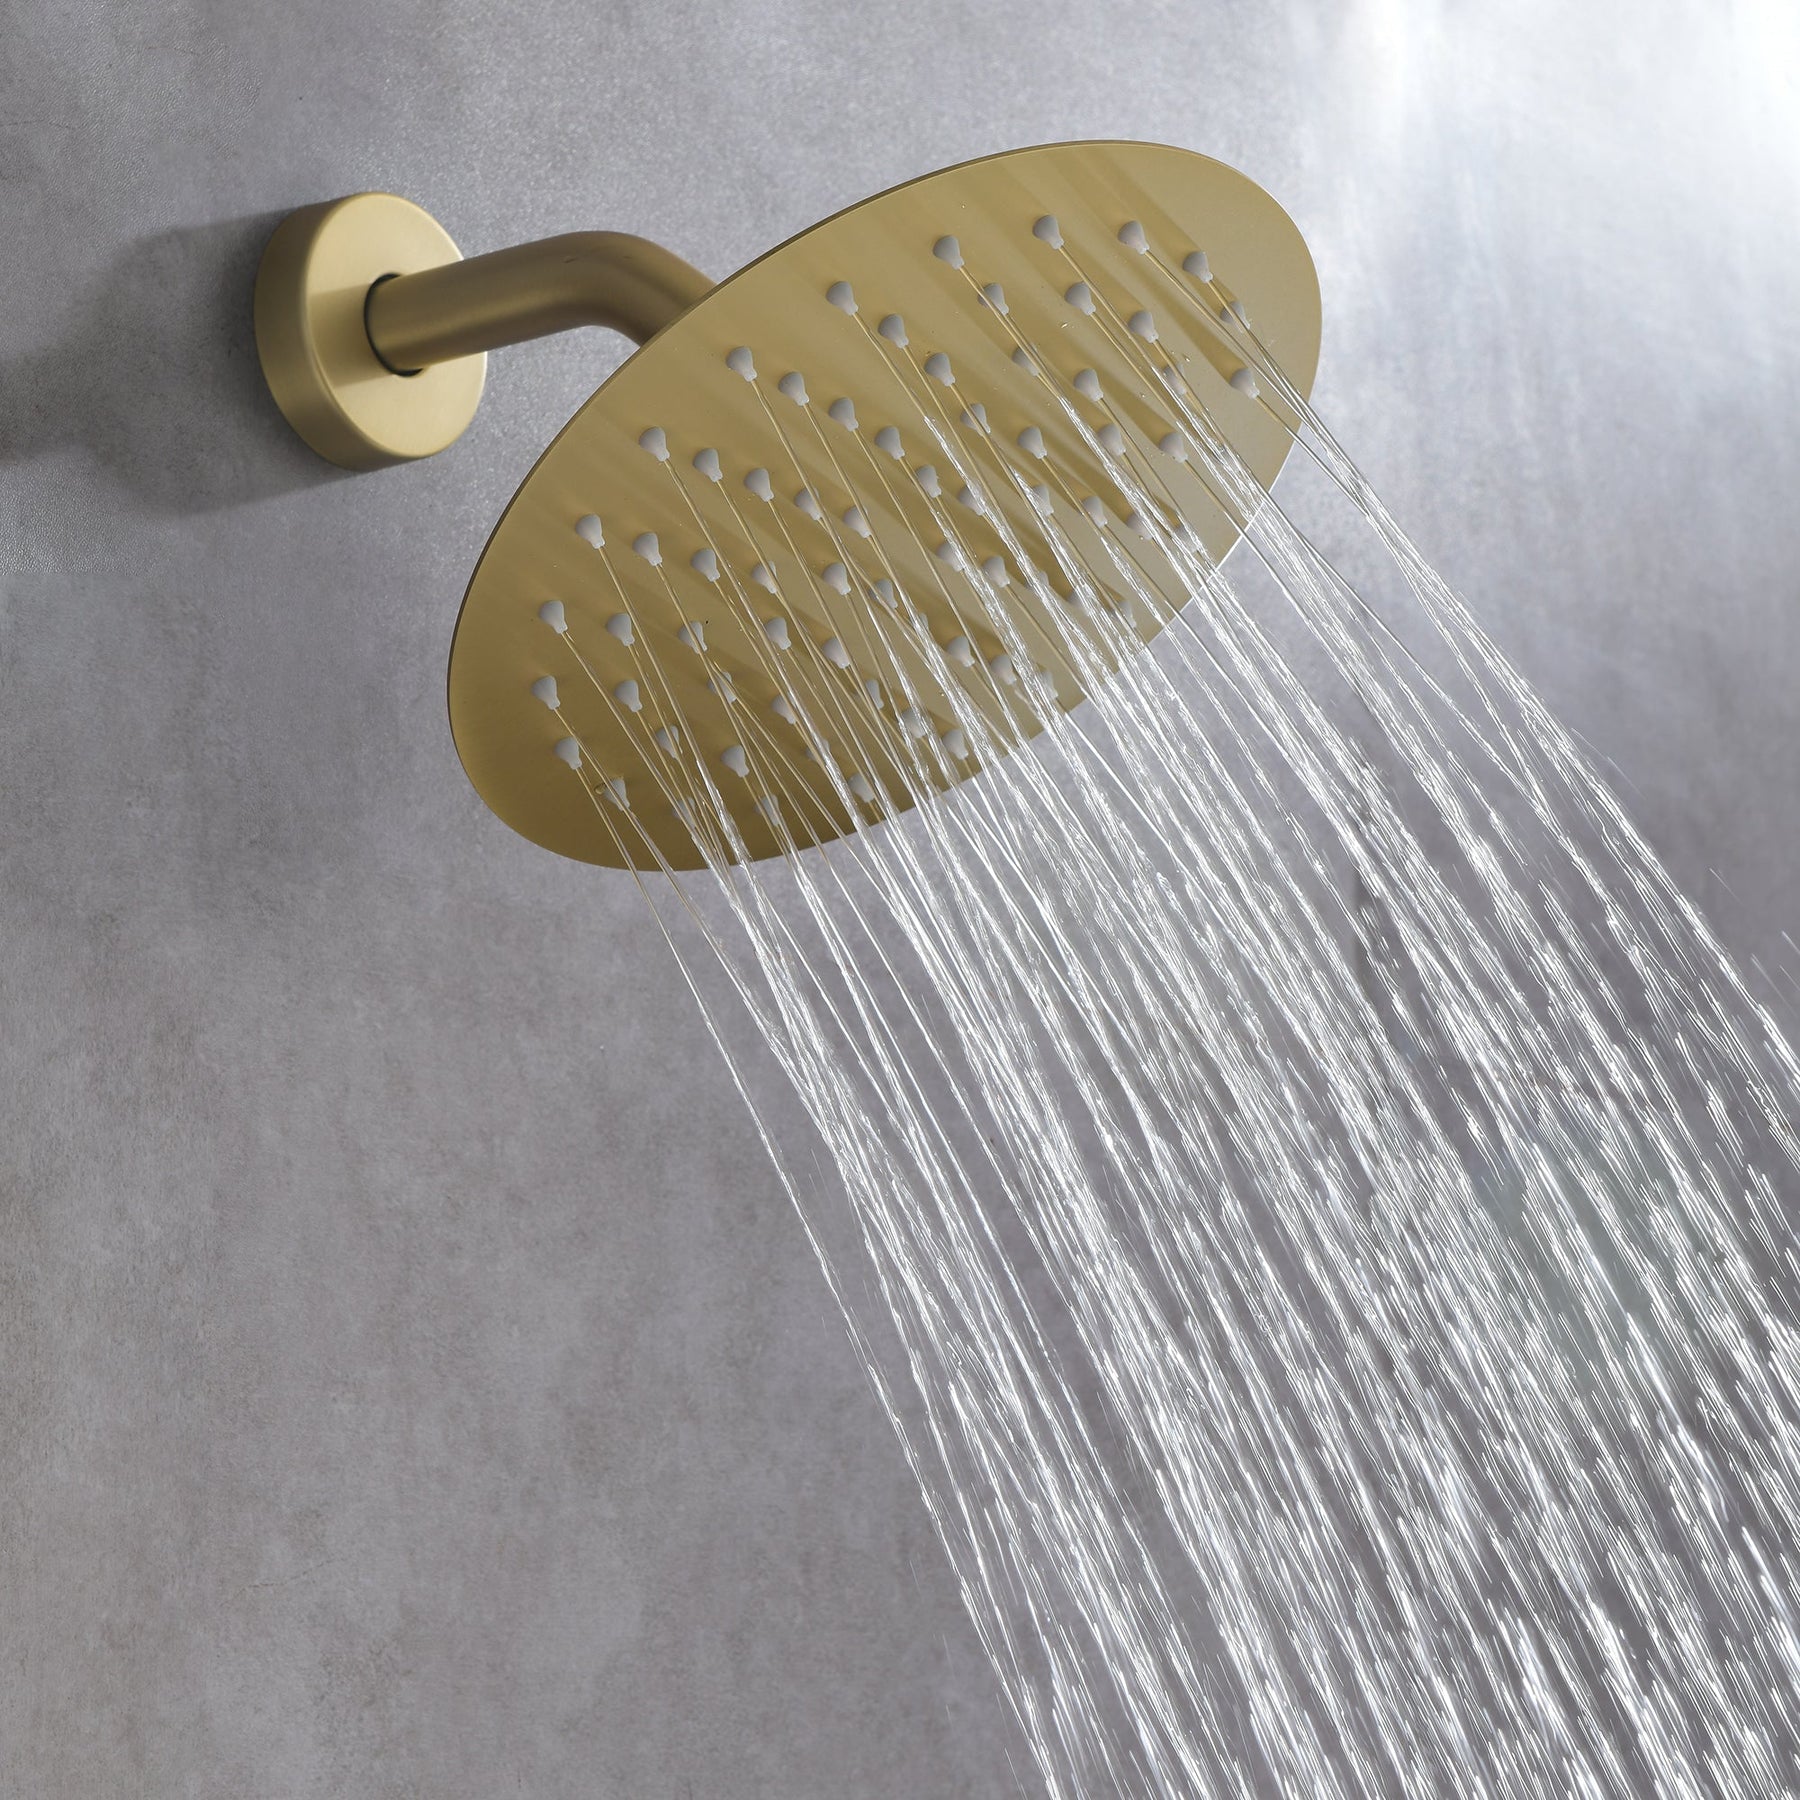 best shower system